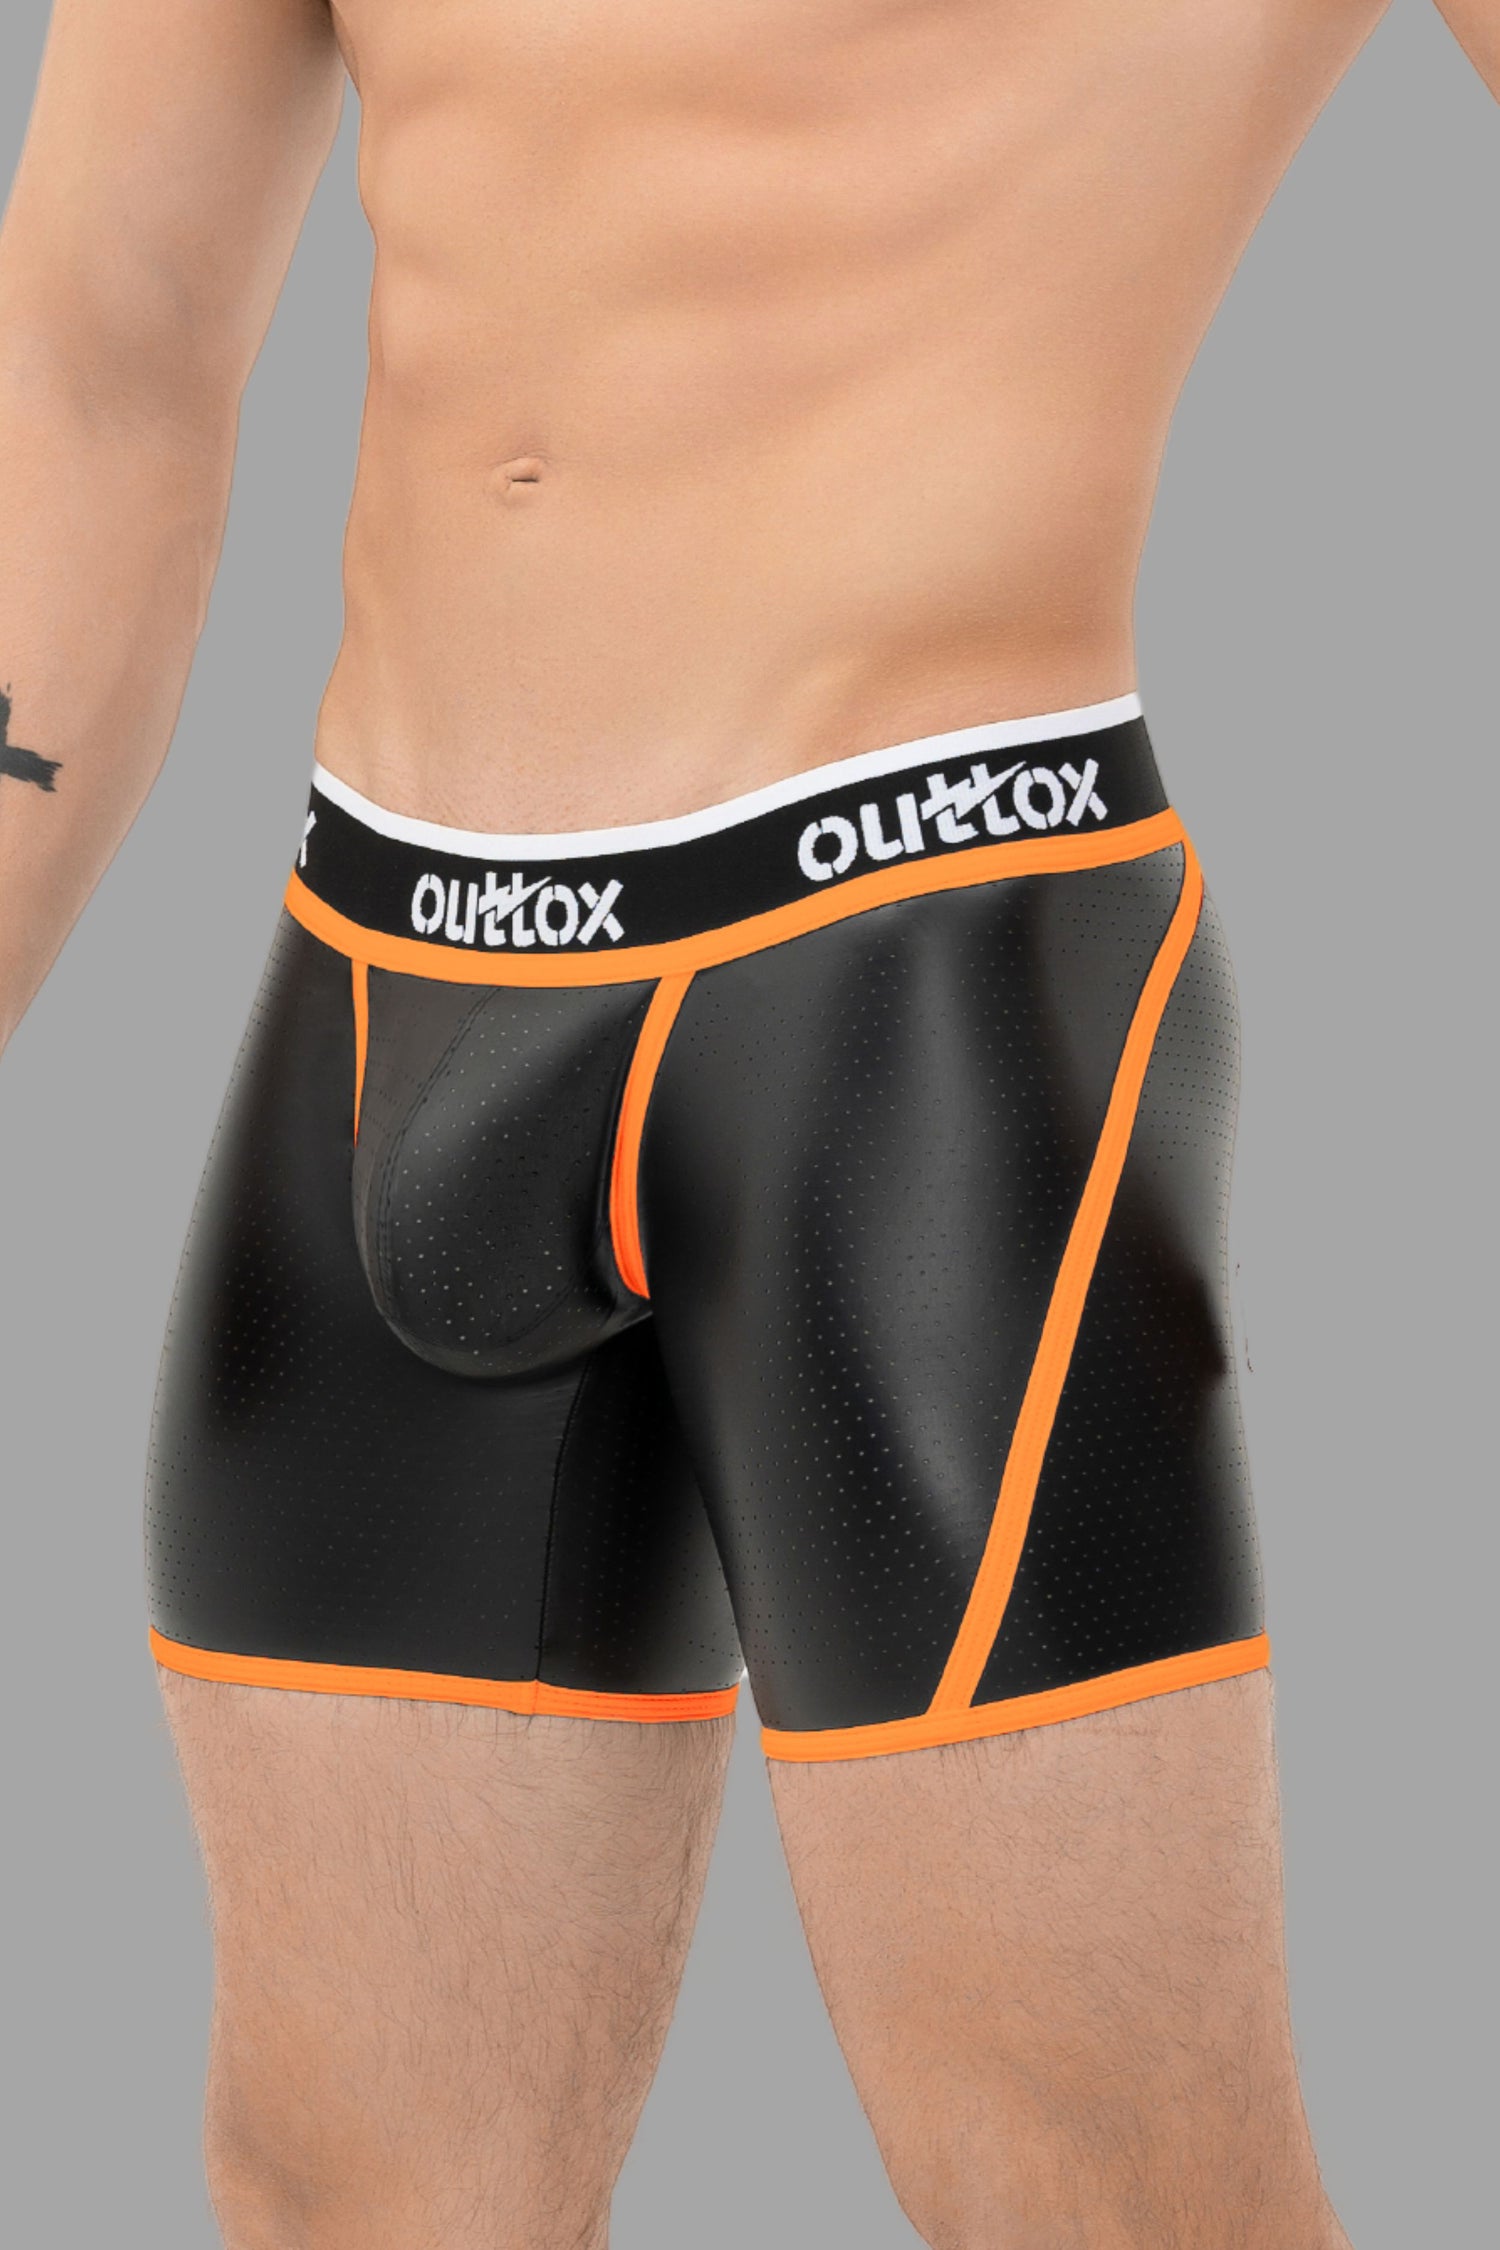 Outtox. Wrap-Rear Short Tights. Snap Codpiece. Black+Orange